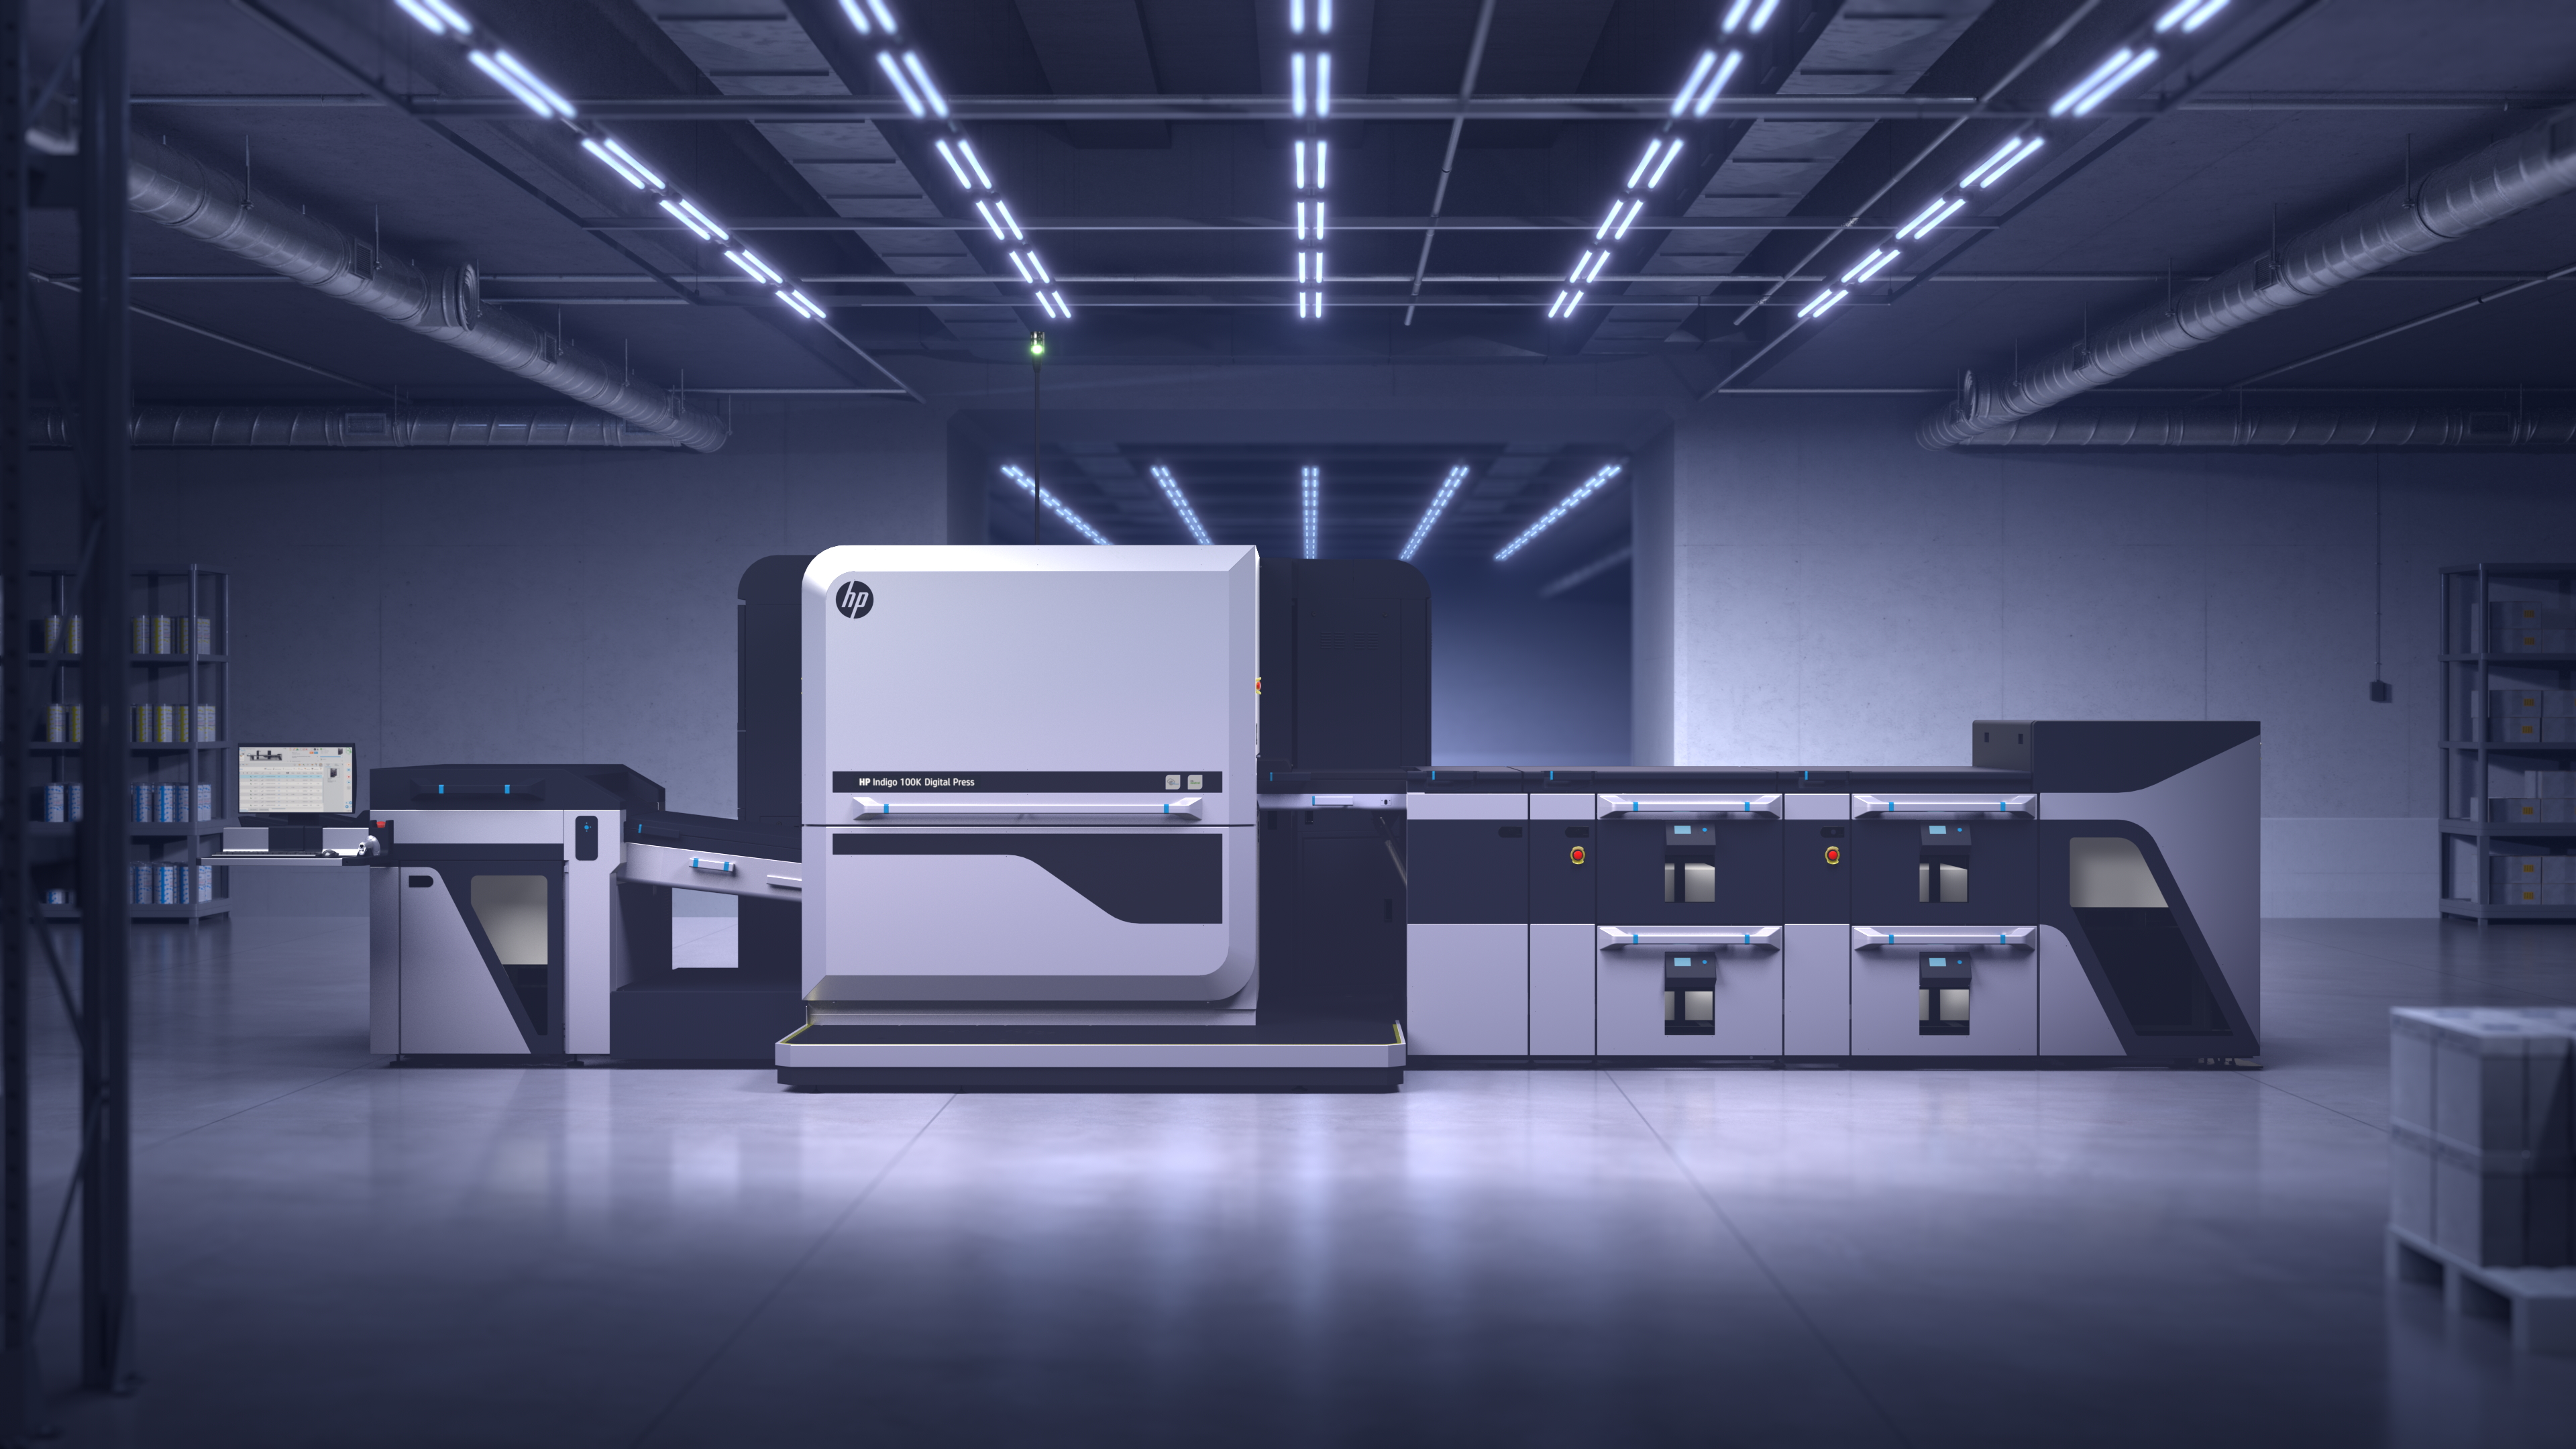 HP Indigo 100K Digital Press in printing environment